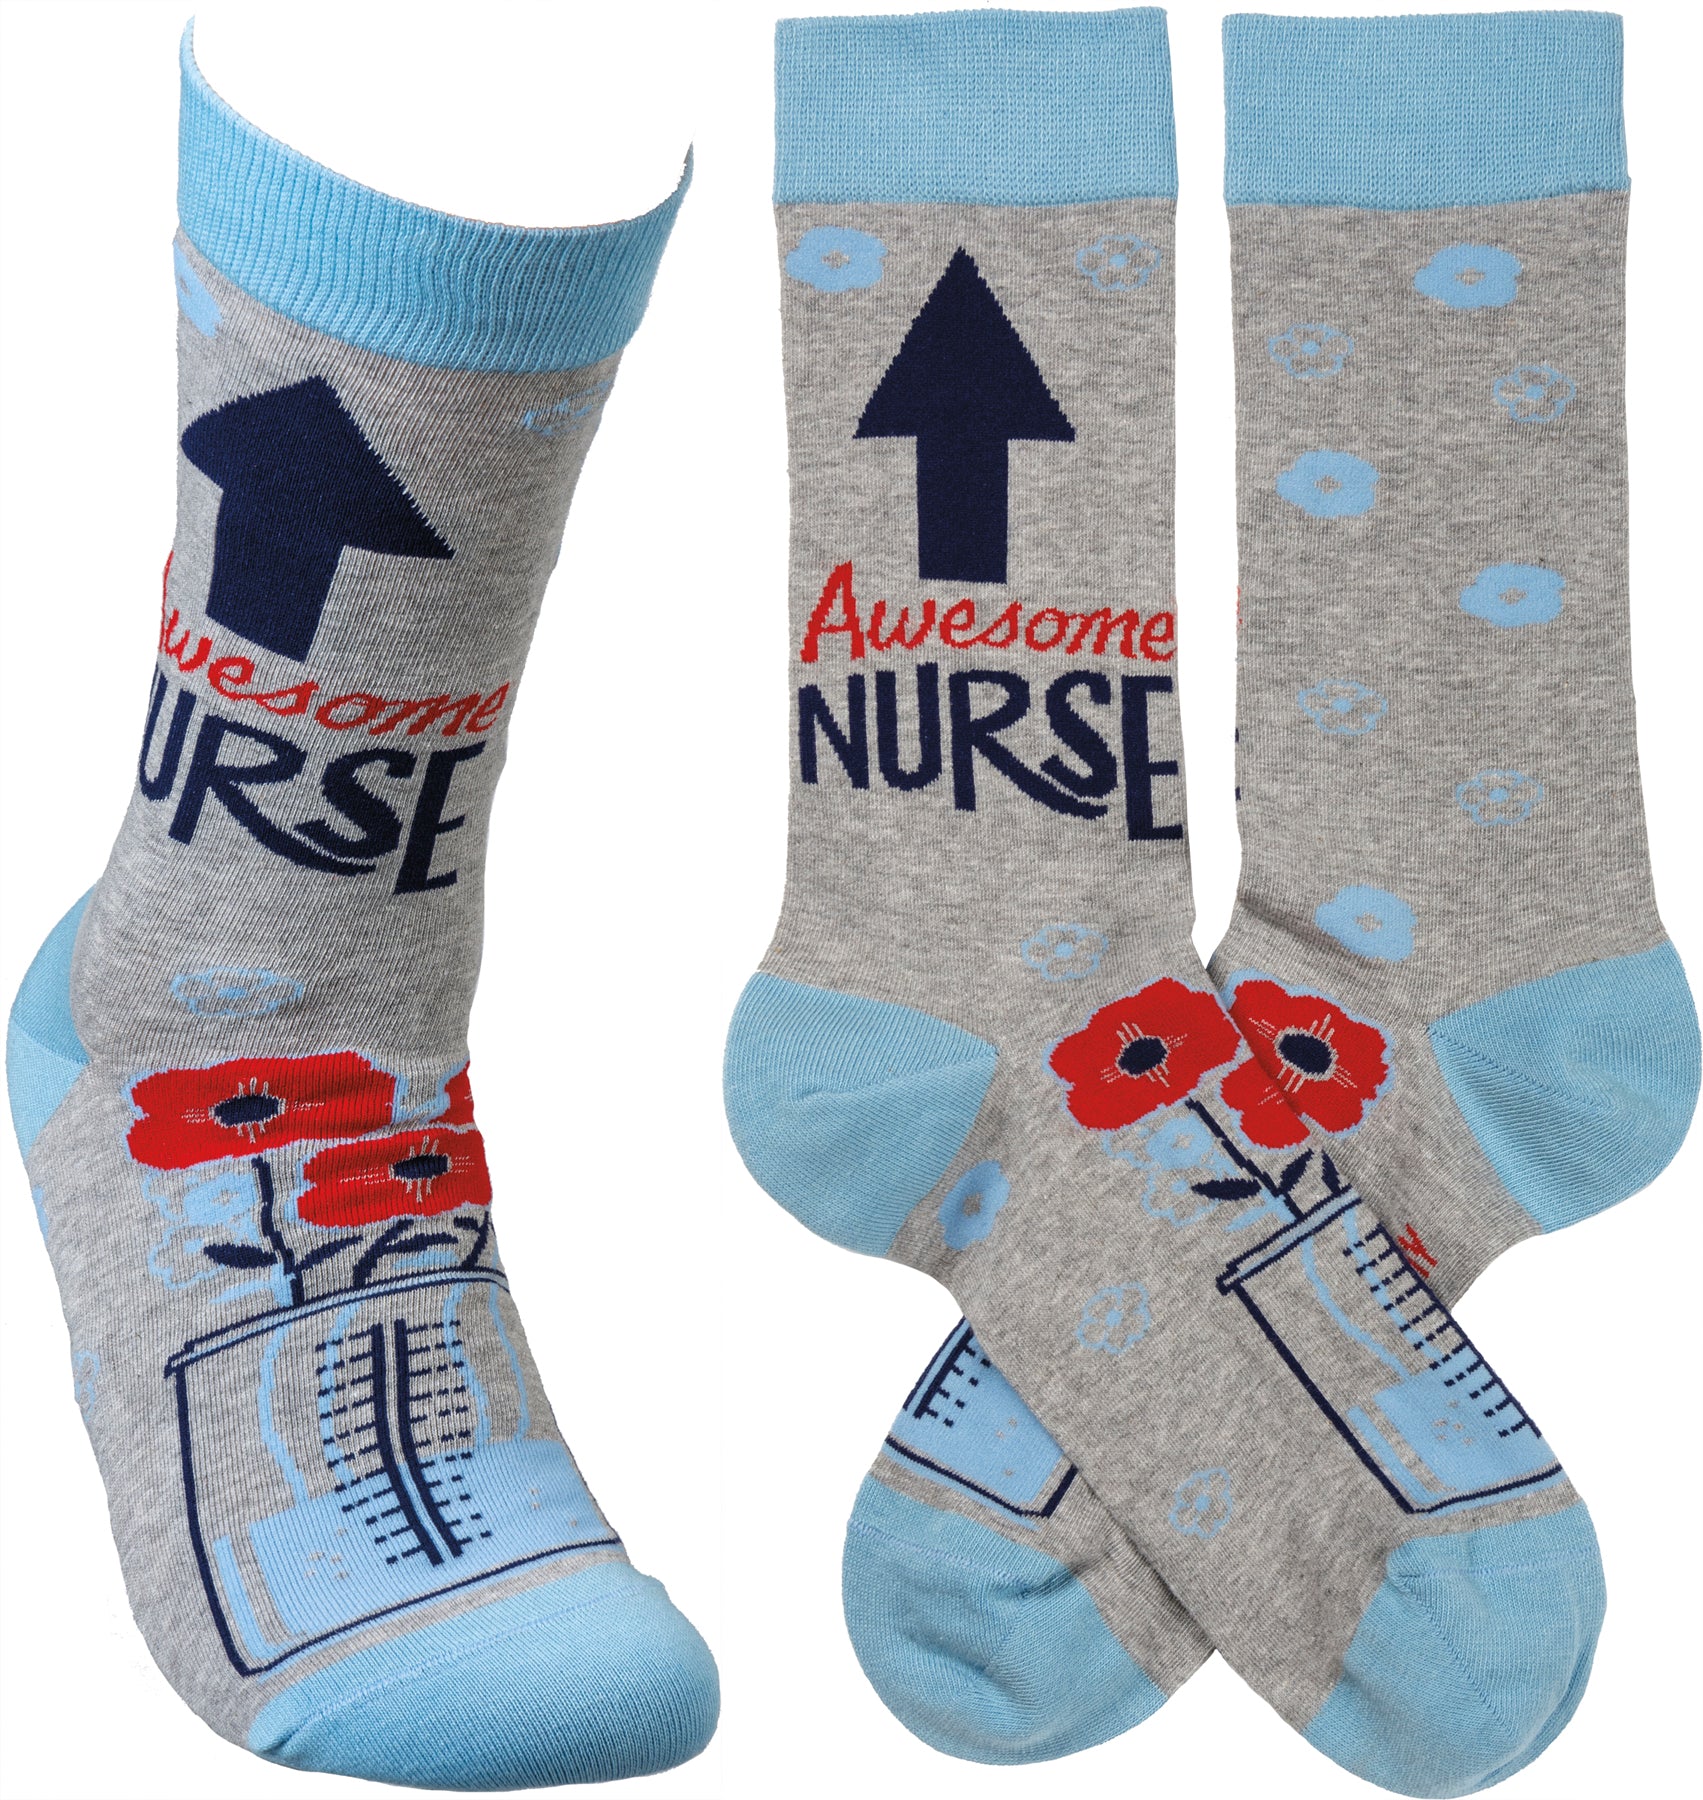 Socks-Awesome Nurse